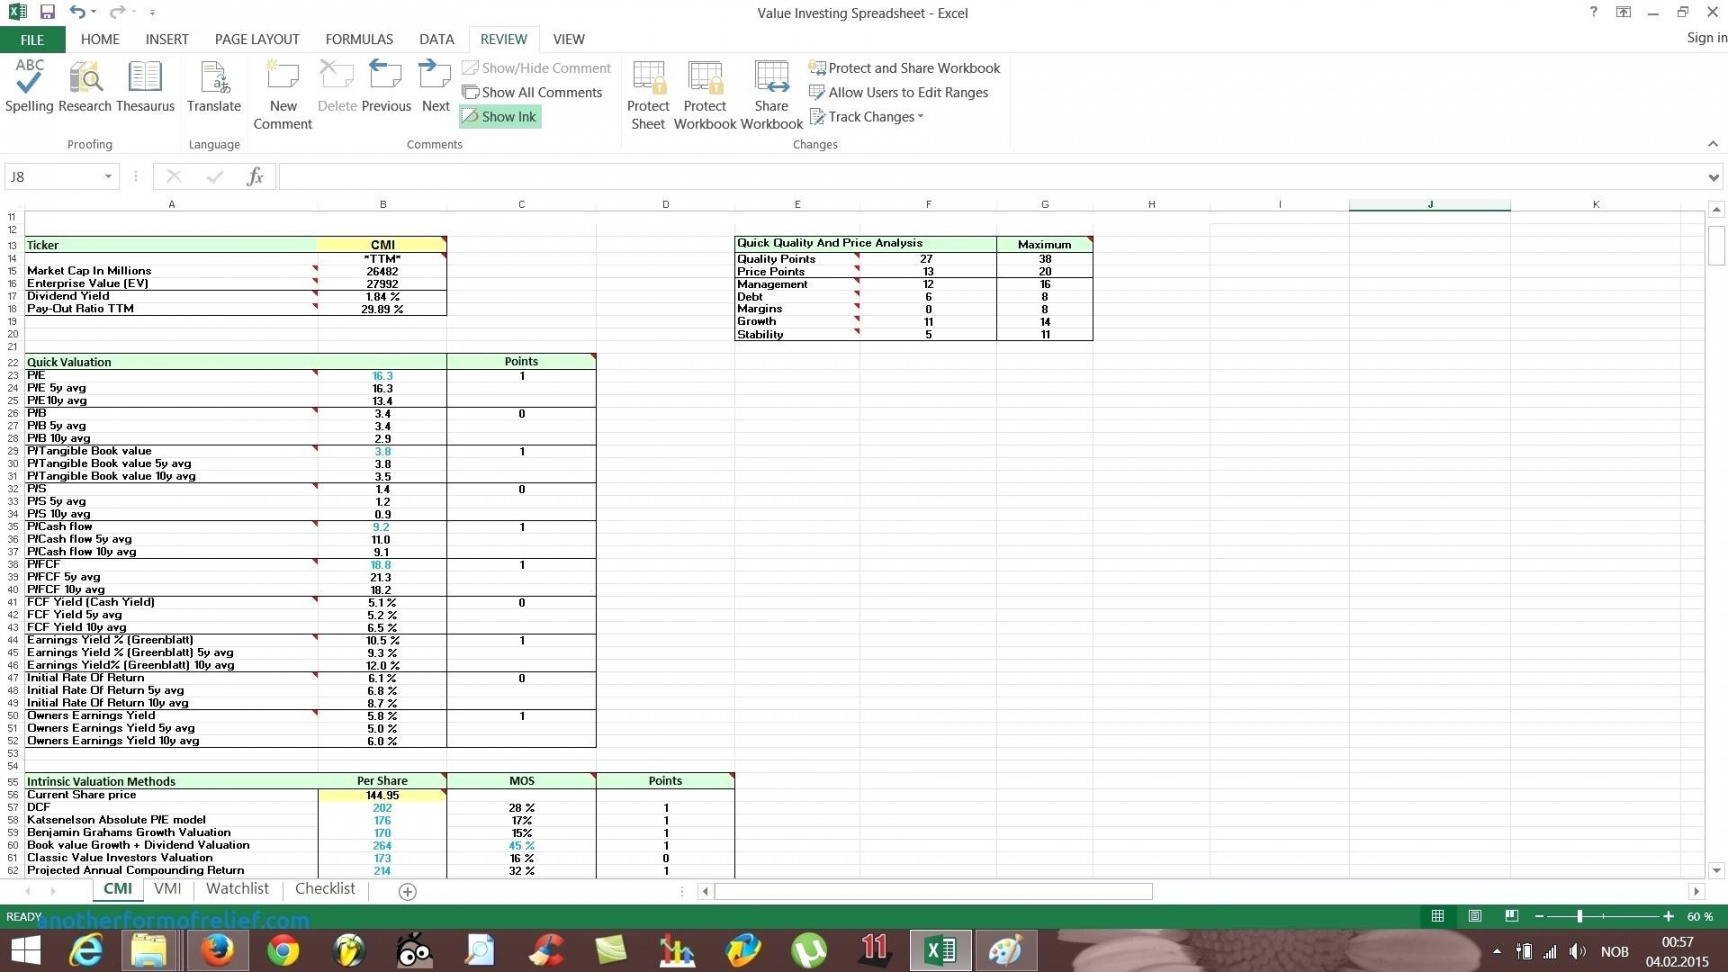 fundamental analysis spreadsheet then stock analysis report template stock analysis report template excel